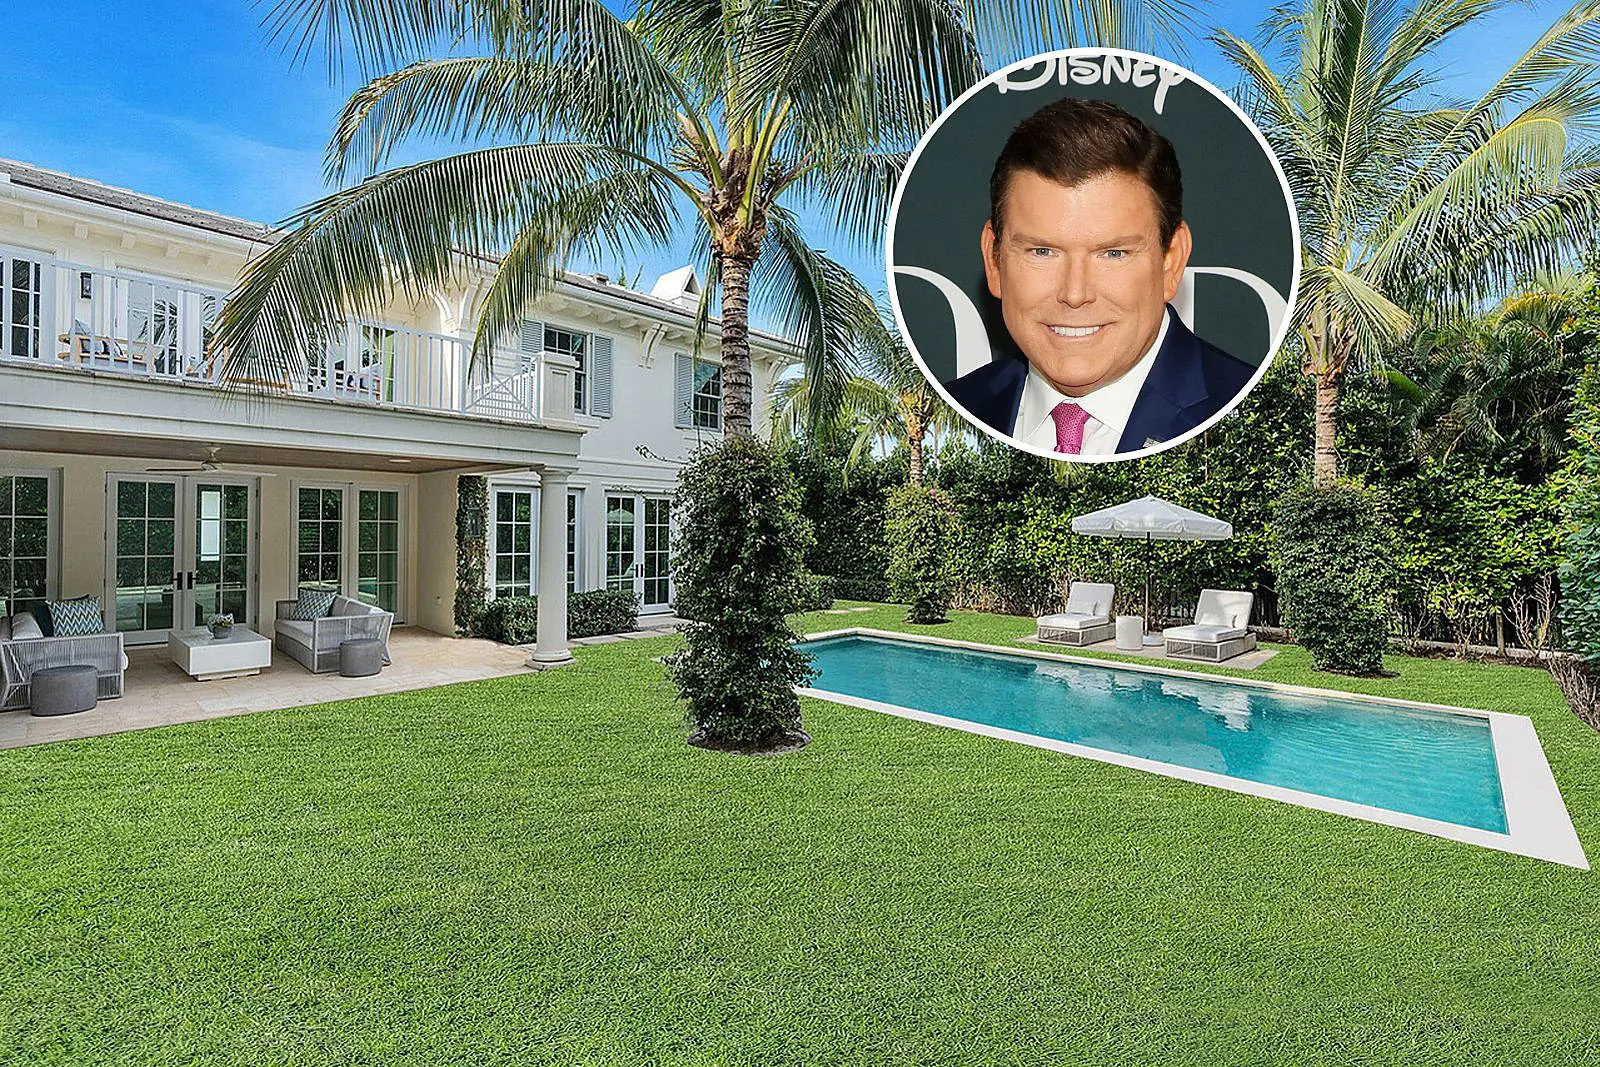 Fox News Anchor Bret Baier Selling Stunning Florida Mansion